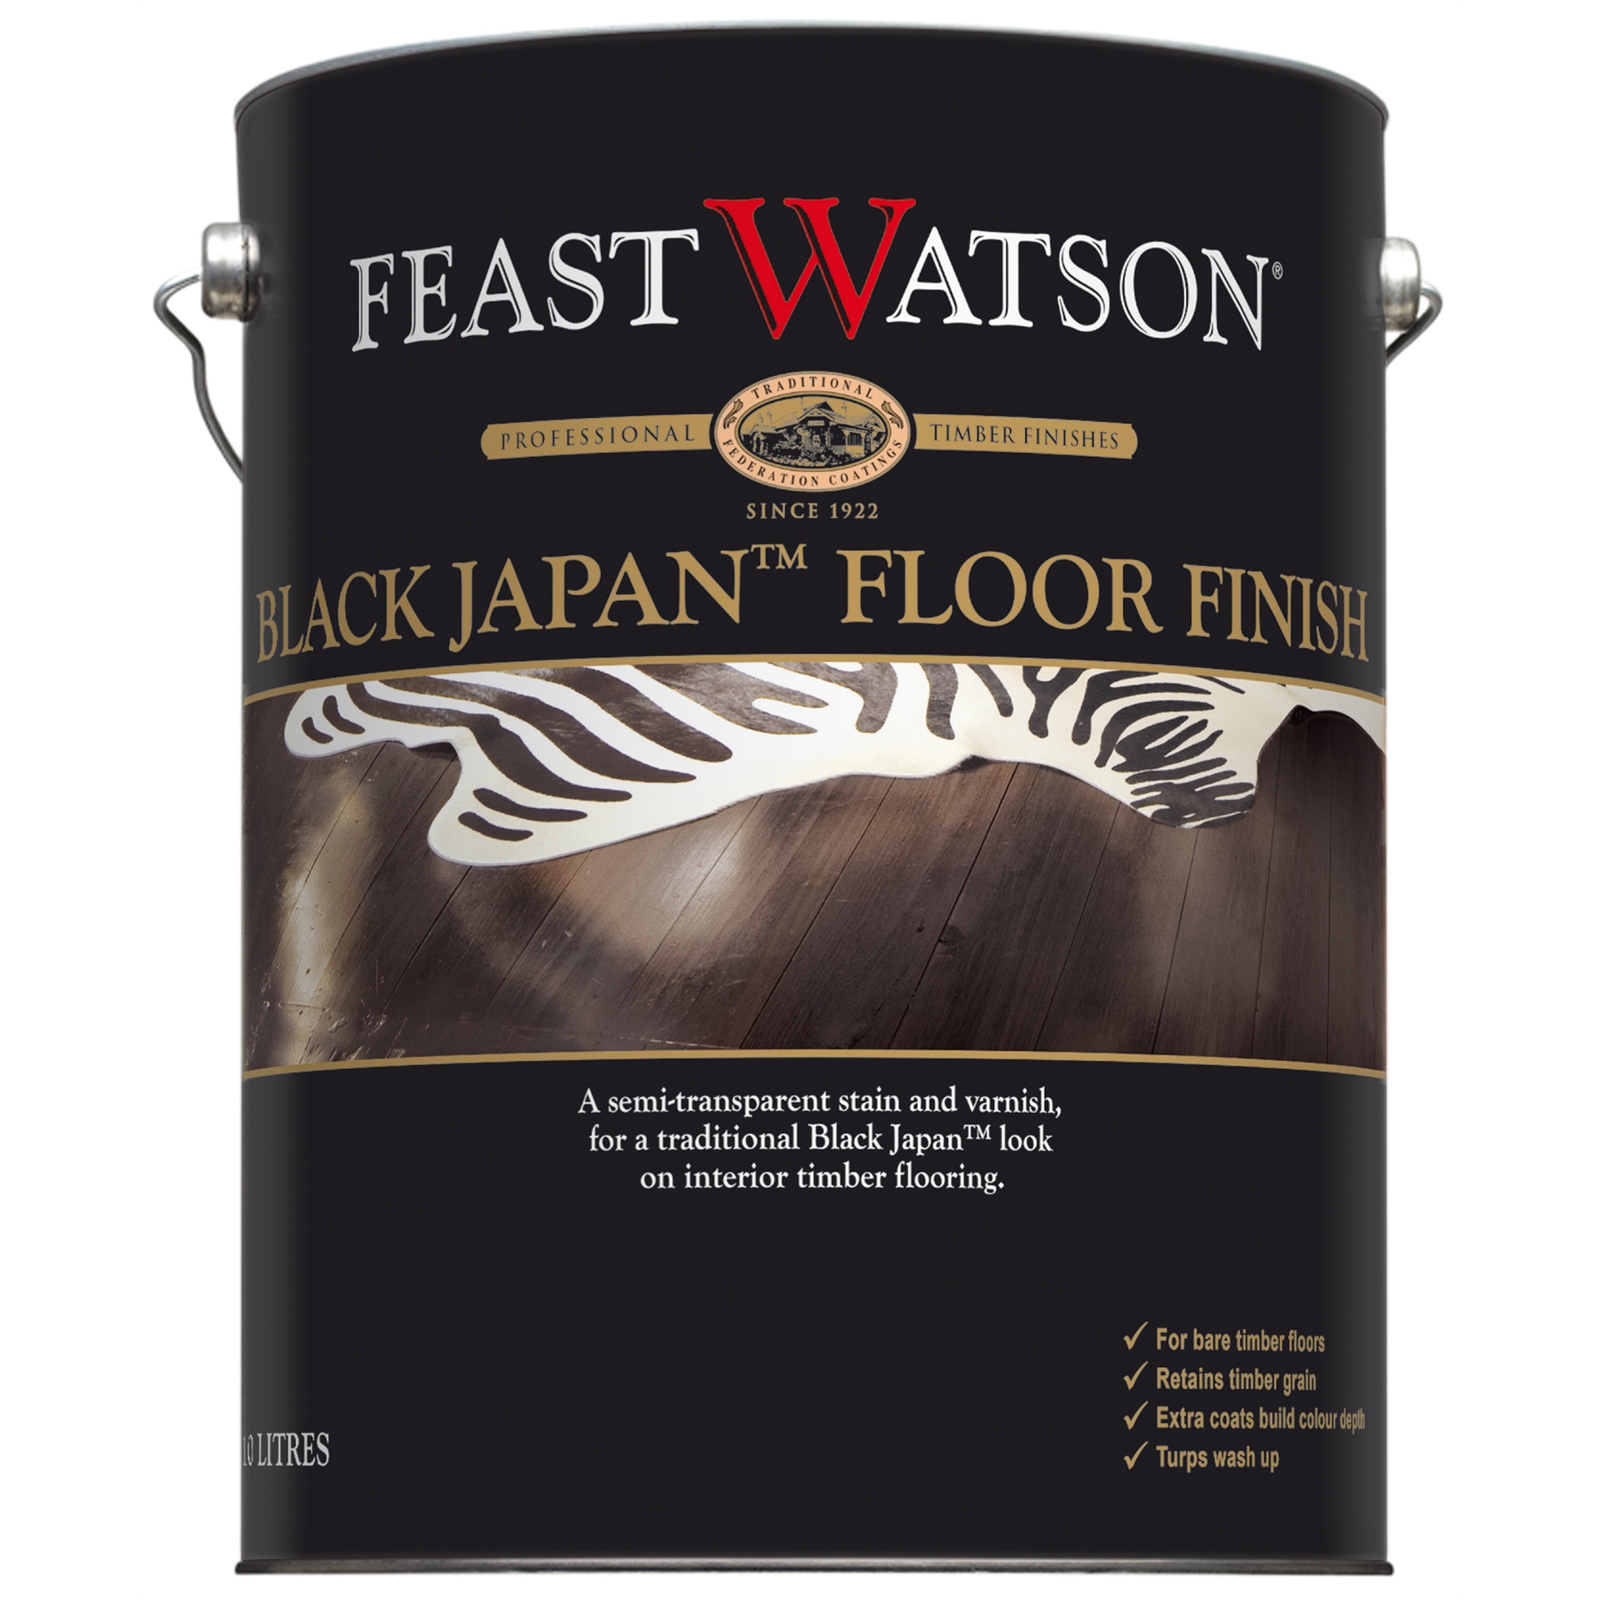 Feast Watson 10L Black Japan Floor Finish